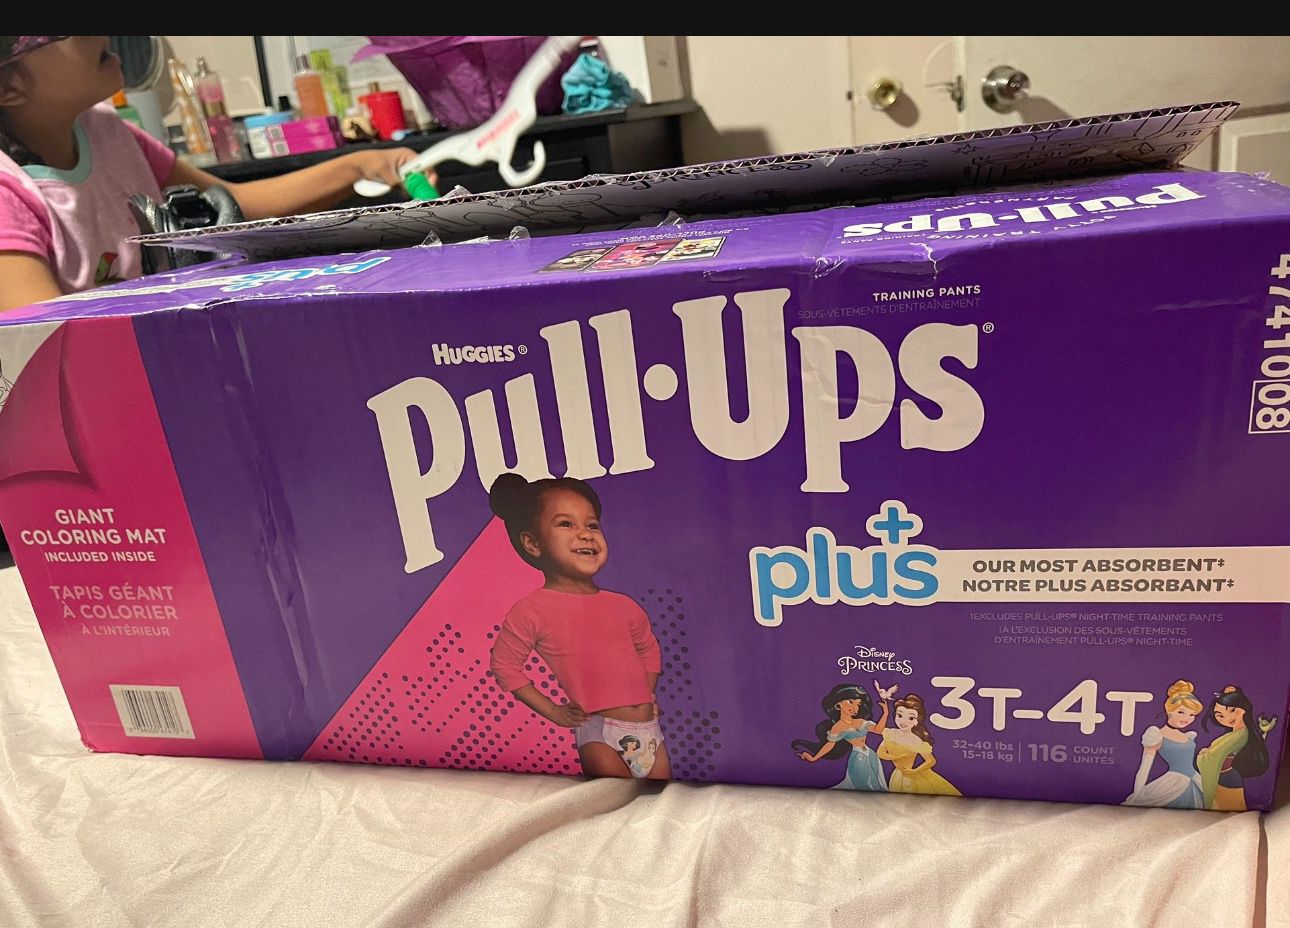 Huggies Pull-ups Plus